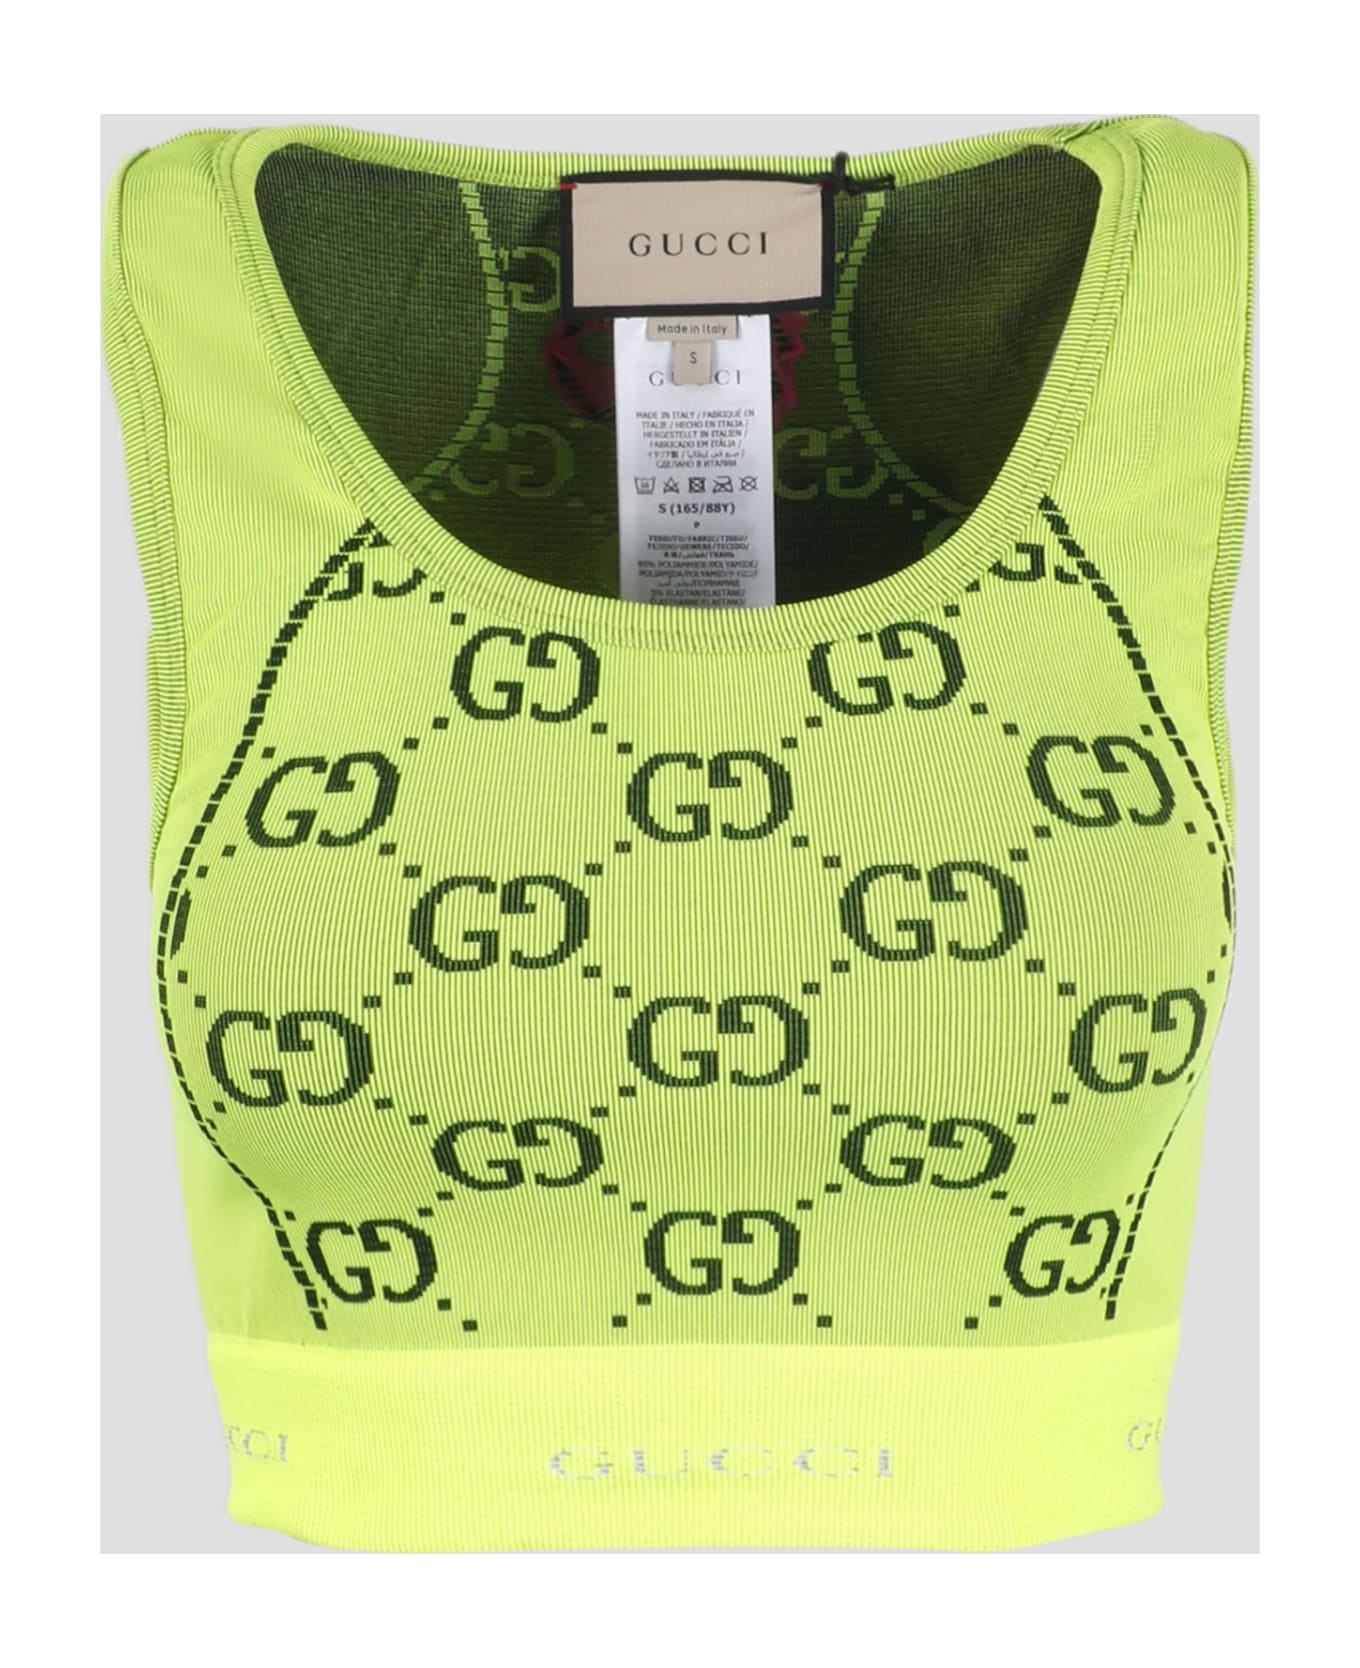 Gucci Gg Jersey Jacquard Top - Yellow & Orange